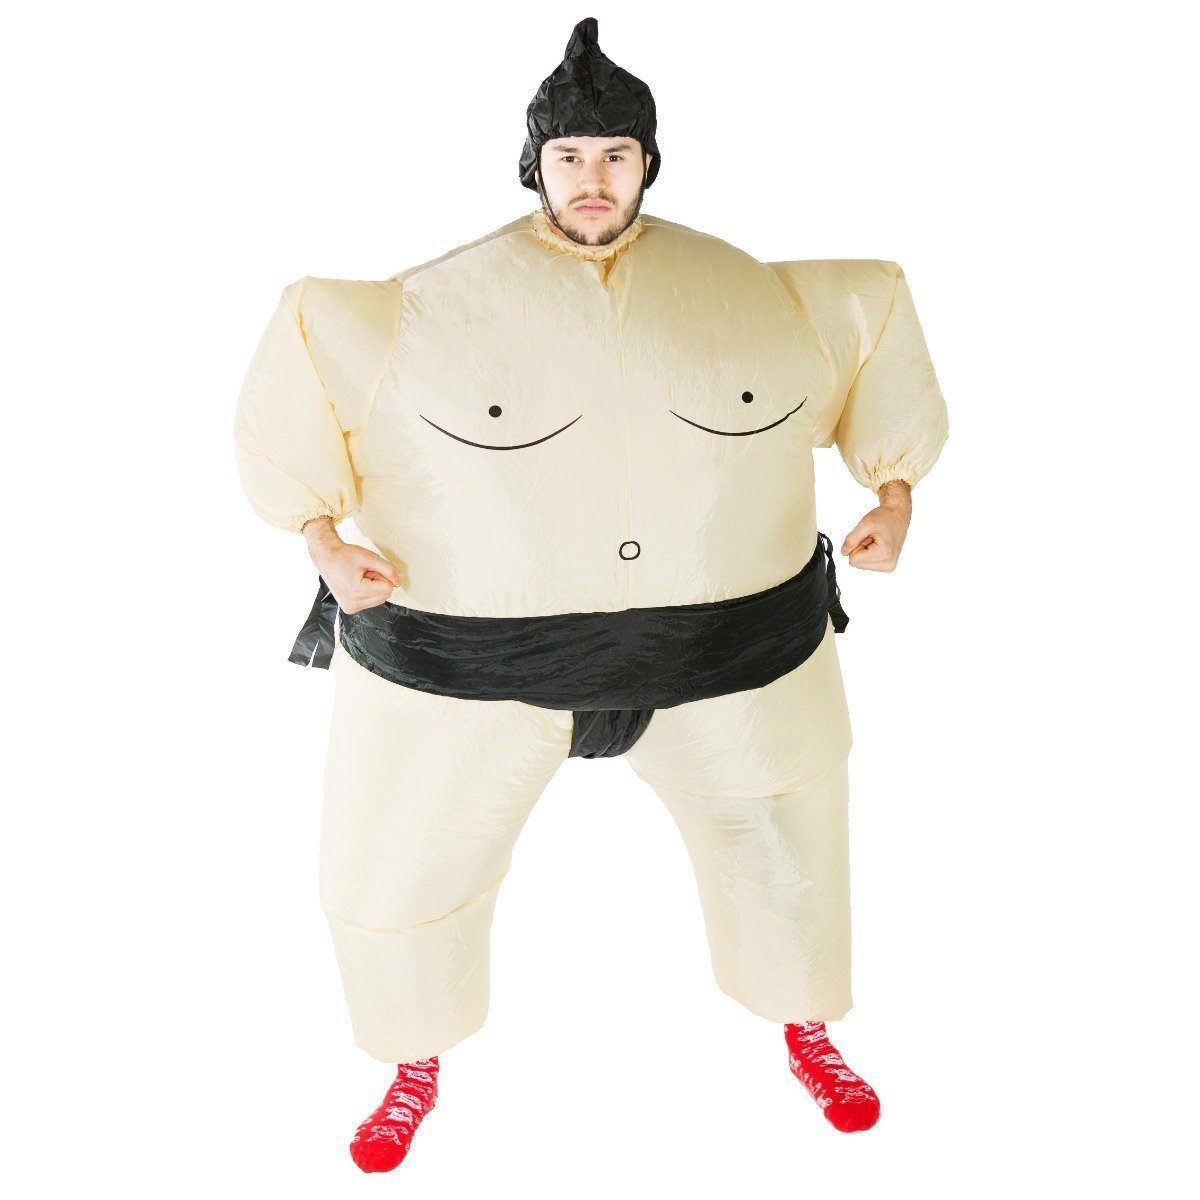 Fancy Dress - Inflatable Sumo Wrestler Costume